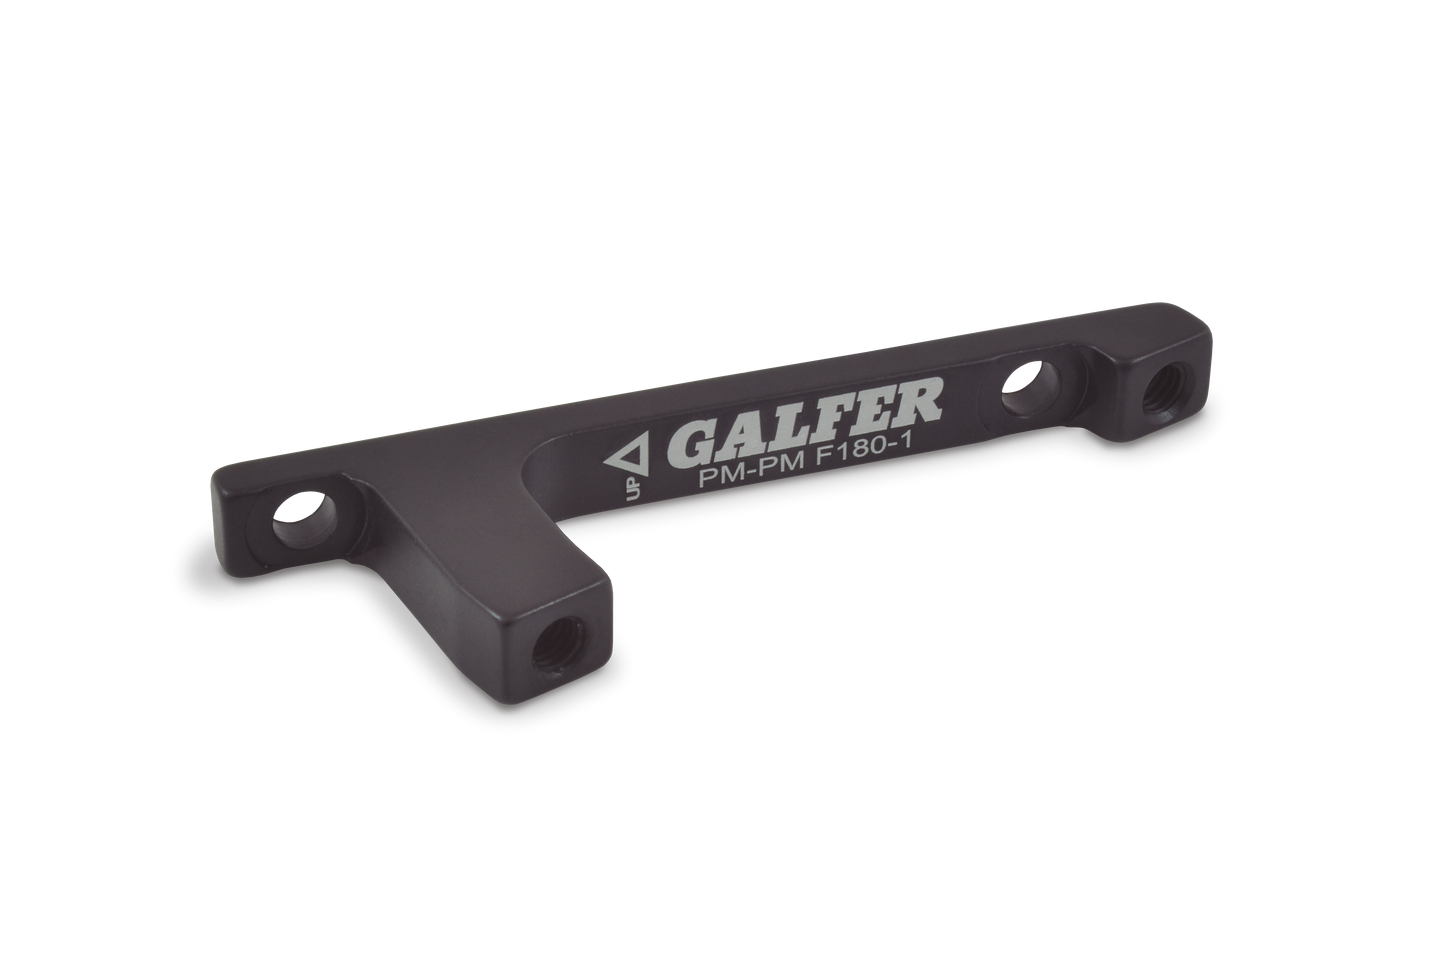 Galfer - Caliper Adapter Bike Radial (Postmount) + 20Mm D. - Rear